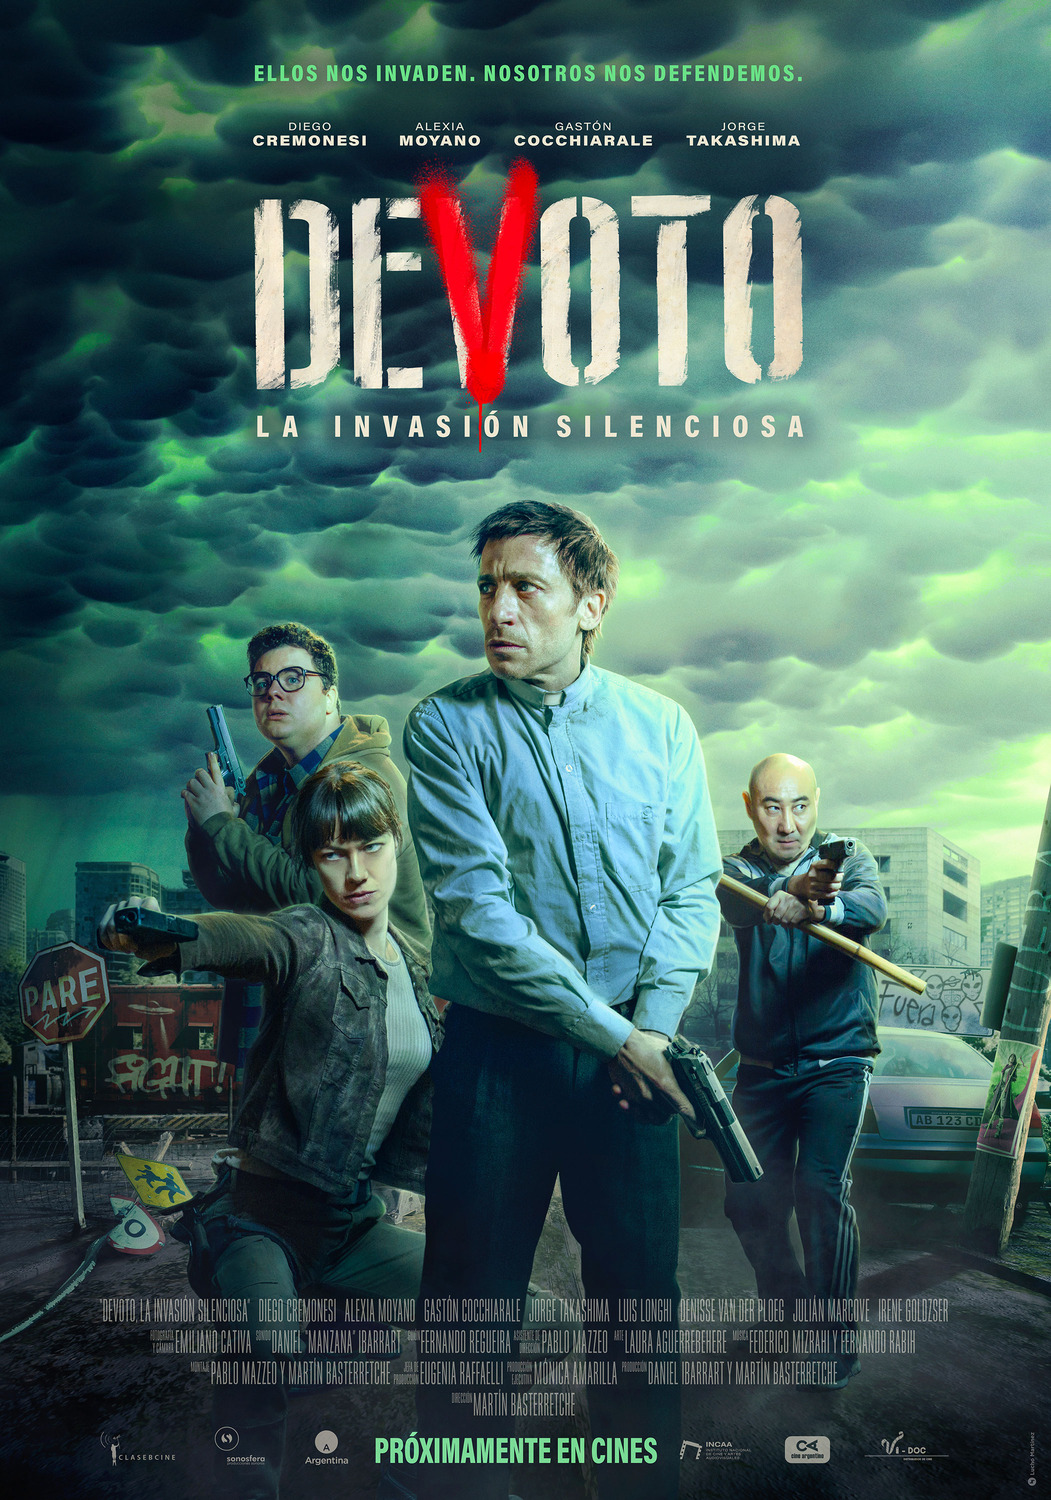 Extra Large Movie Poster Image for Devoto, la invasión silenciosa 